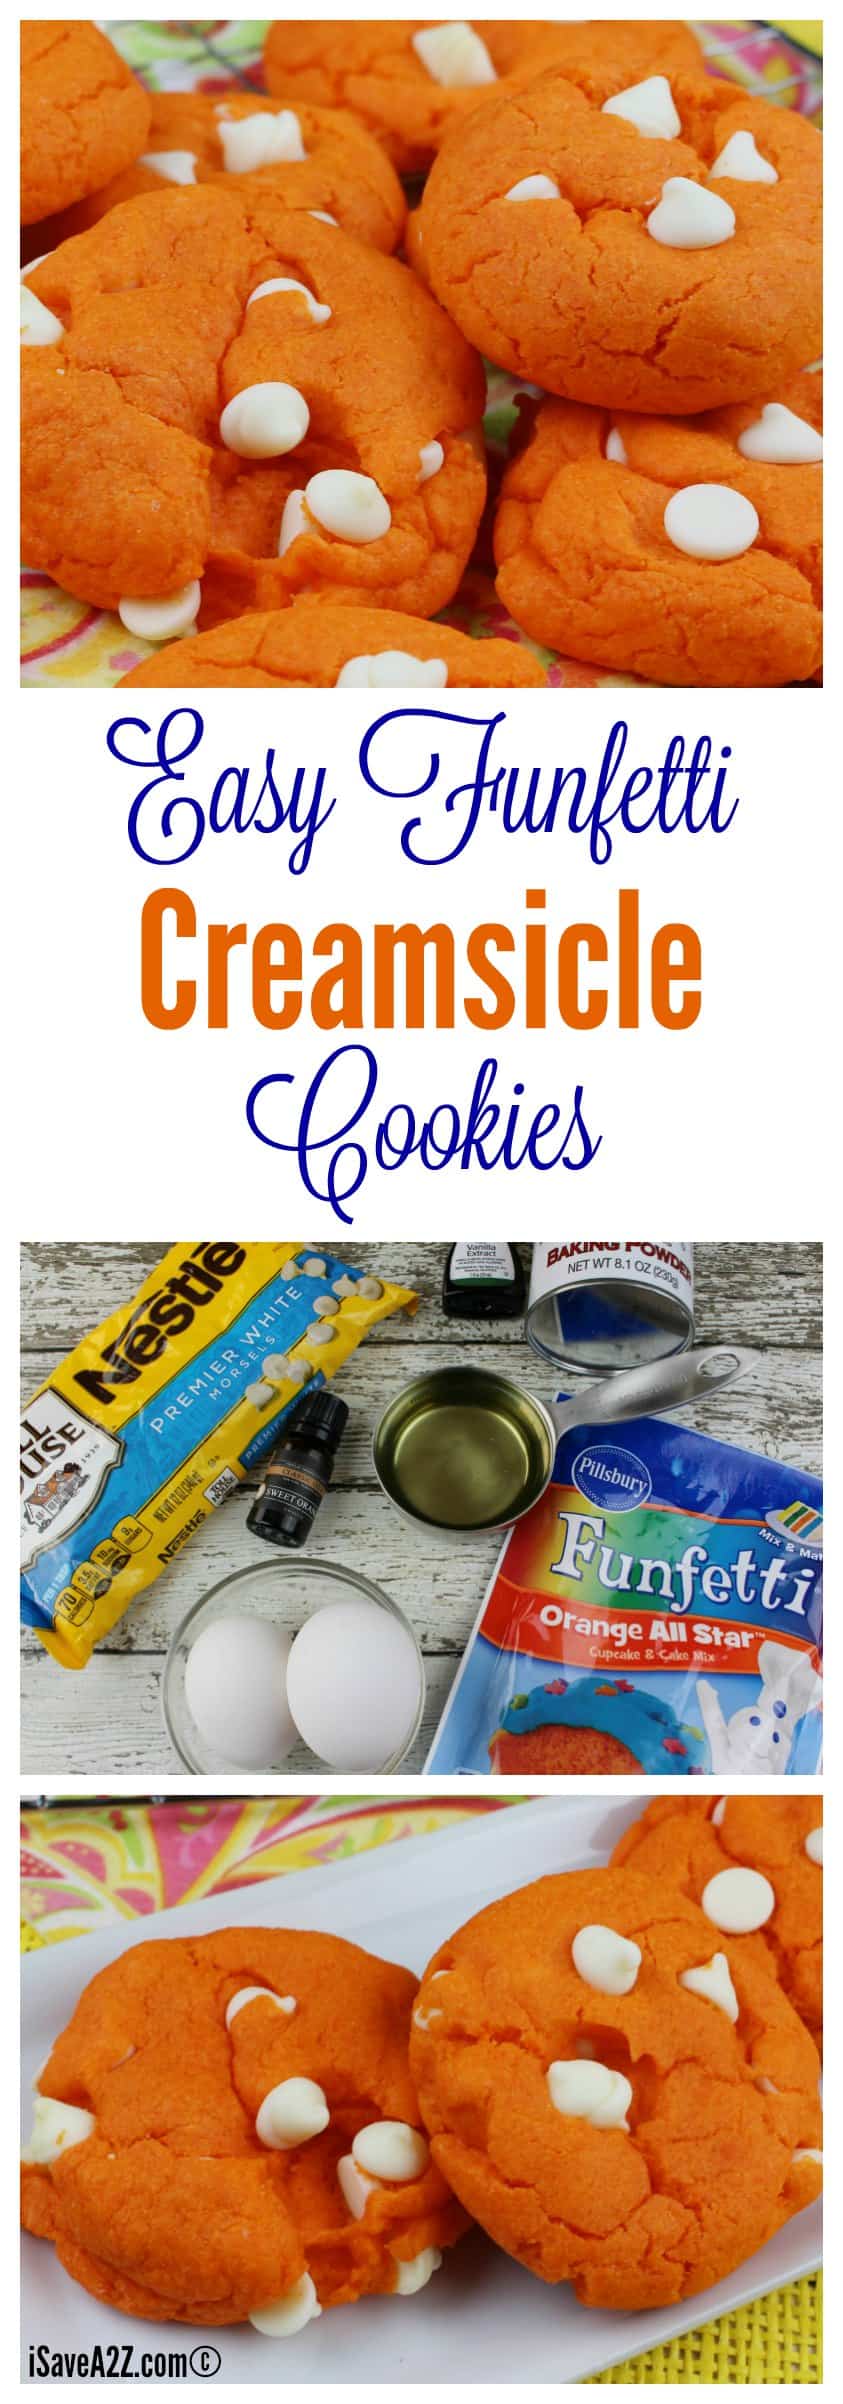 Easy Funfetti Creamsicle Cookies